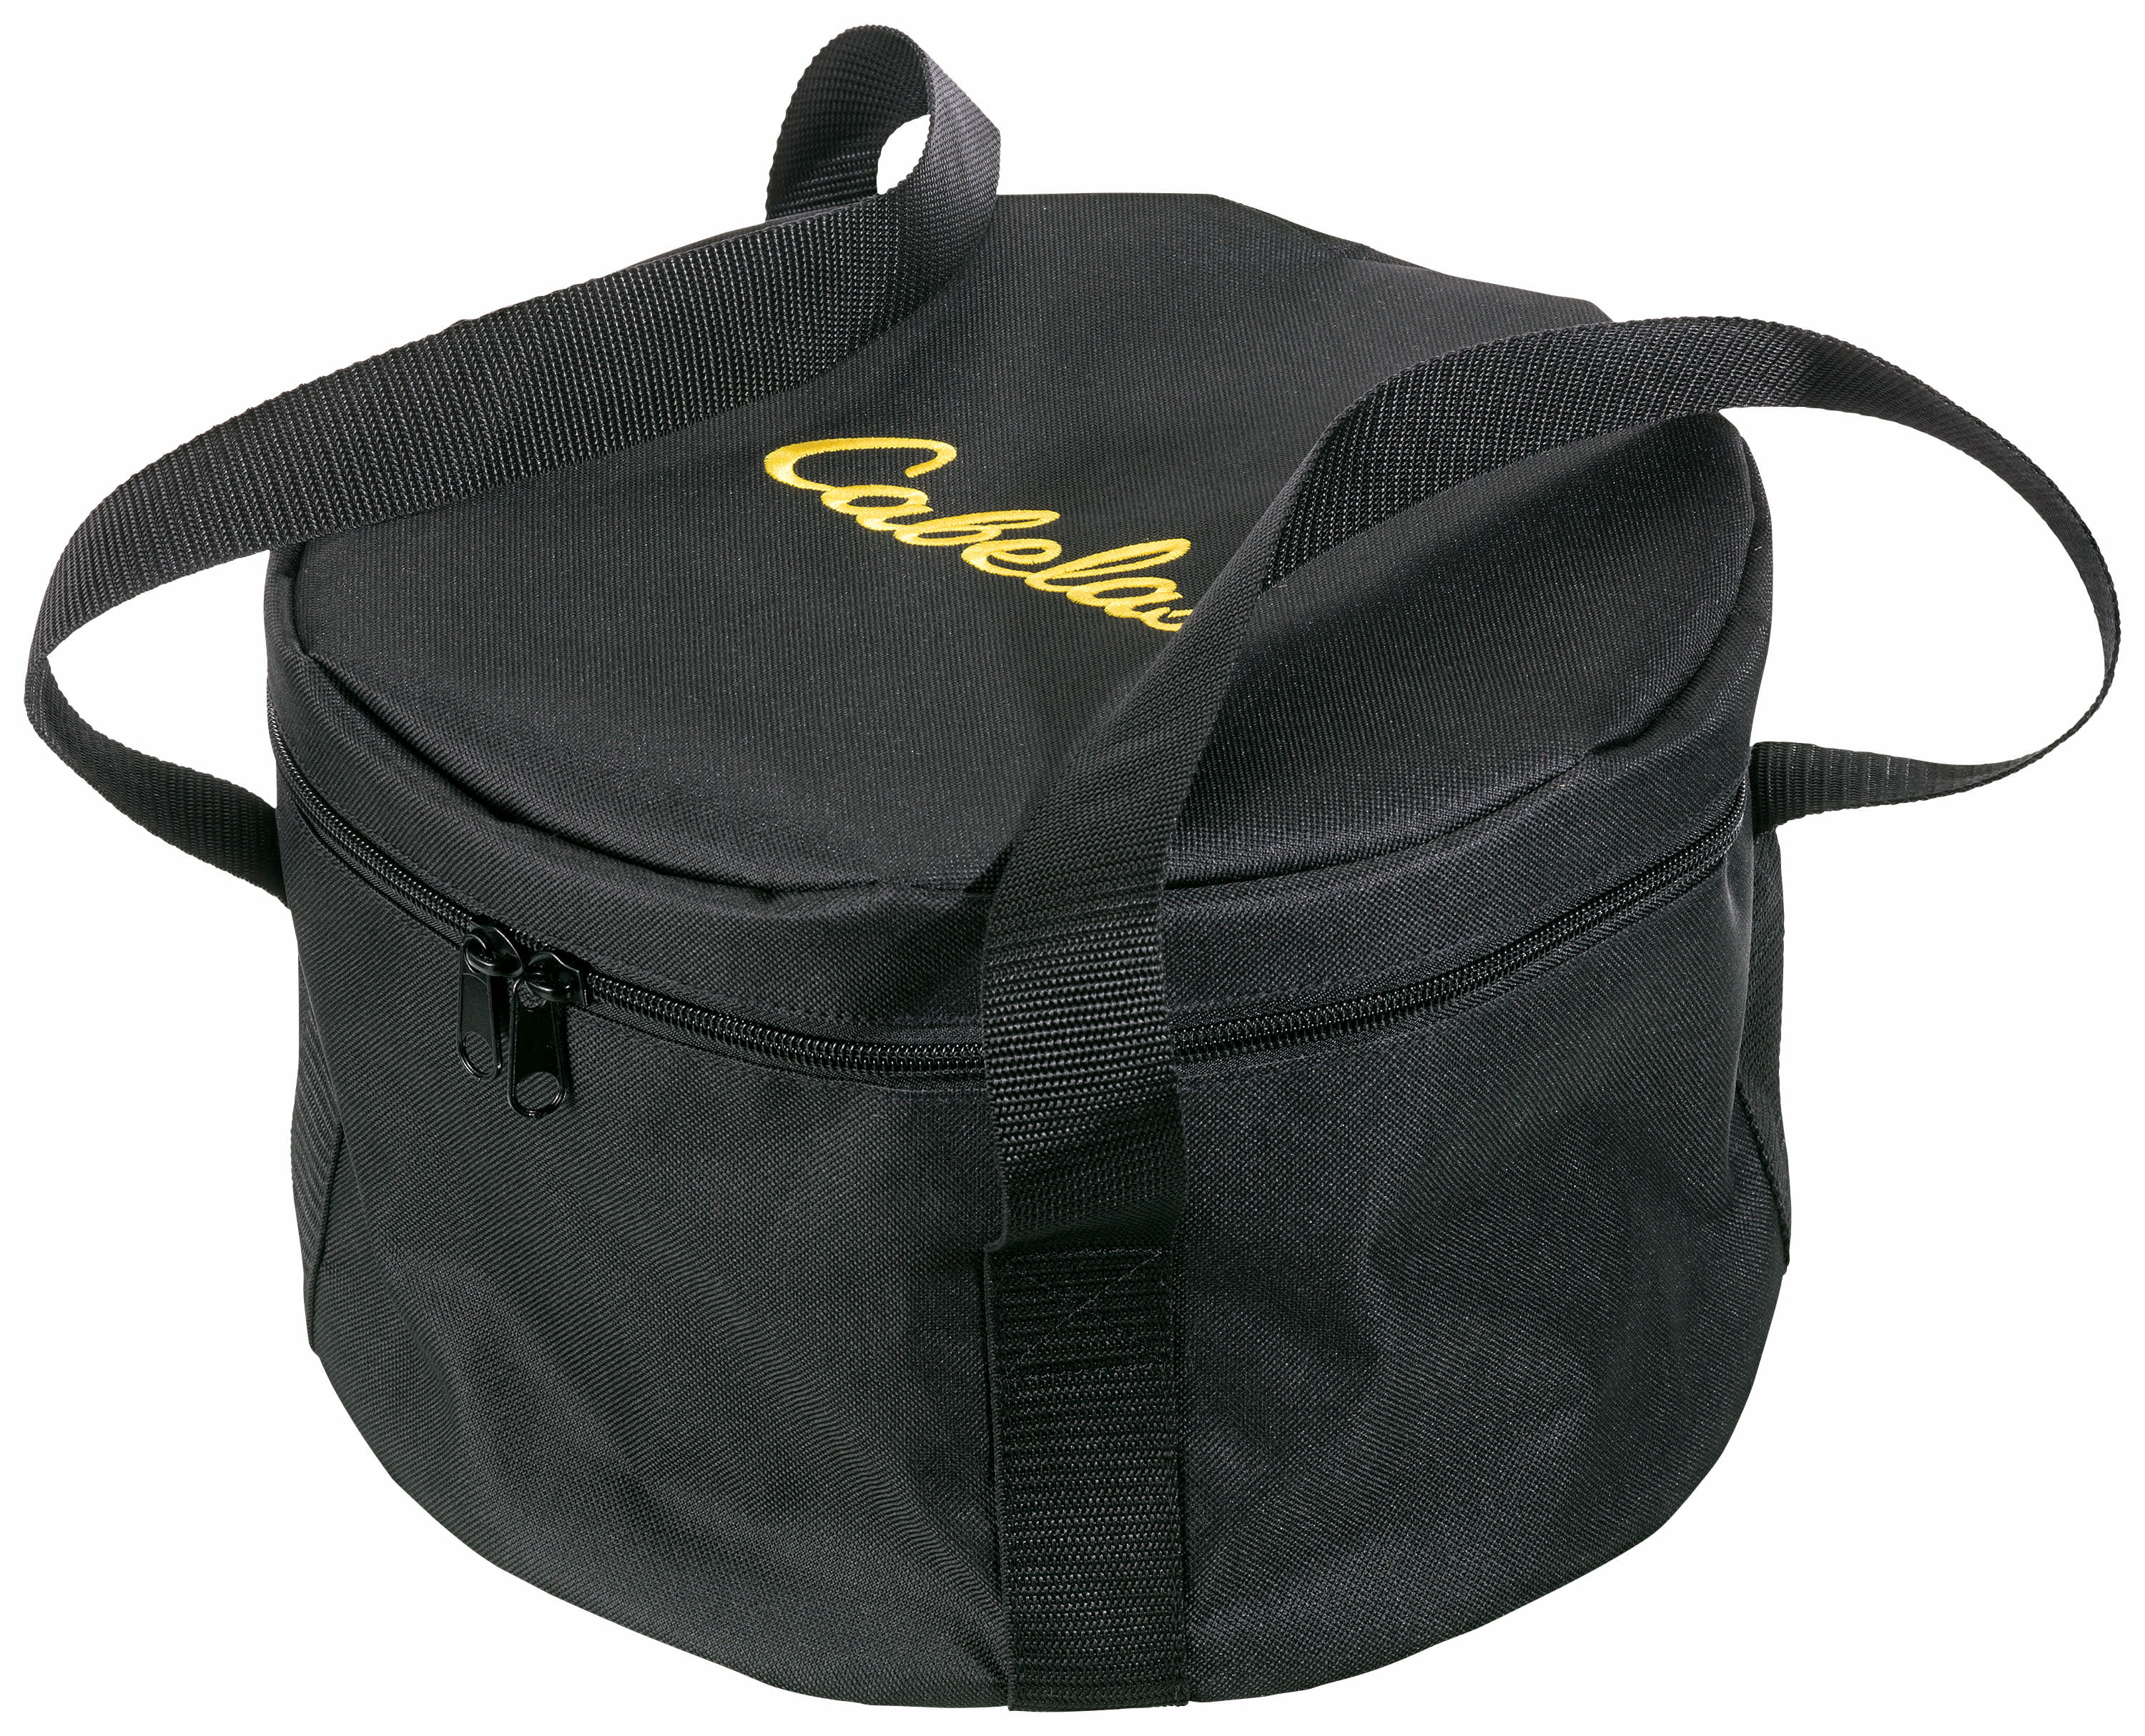 Cabela's® Dutch Oven Tote Bag